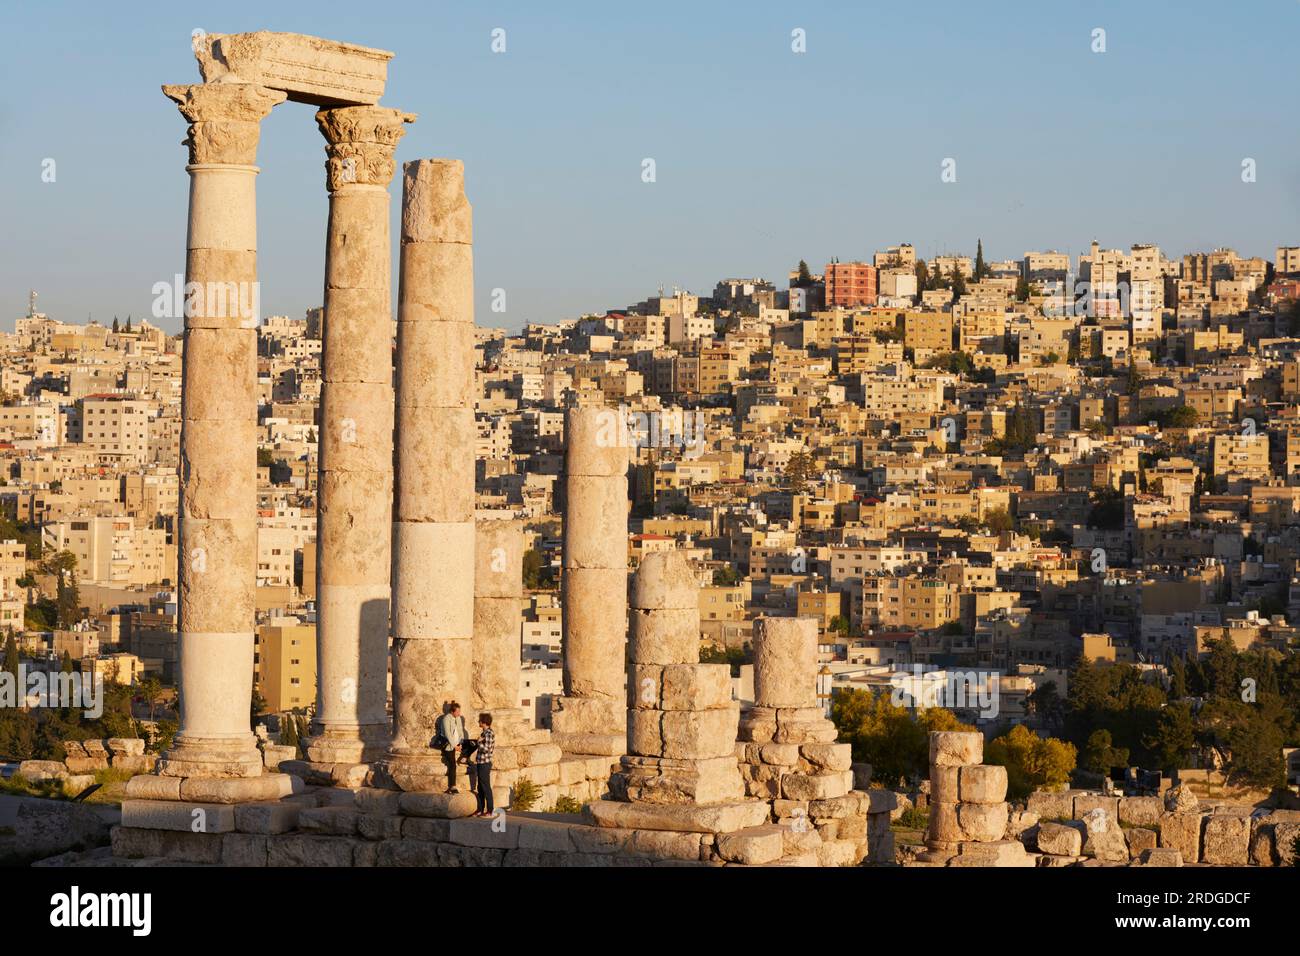 Two people talking on The Temple of Hercules, Citadel, Jabal al-Qala'a hill, Amman, Jordan Stock Photo